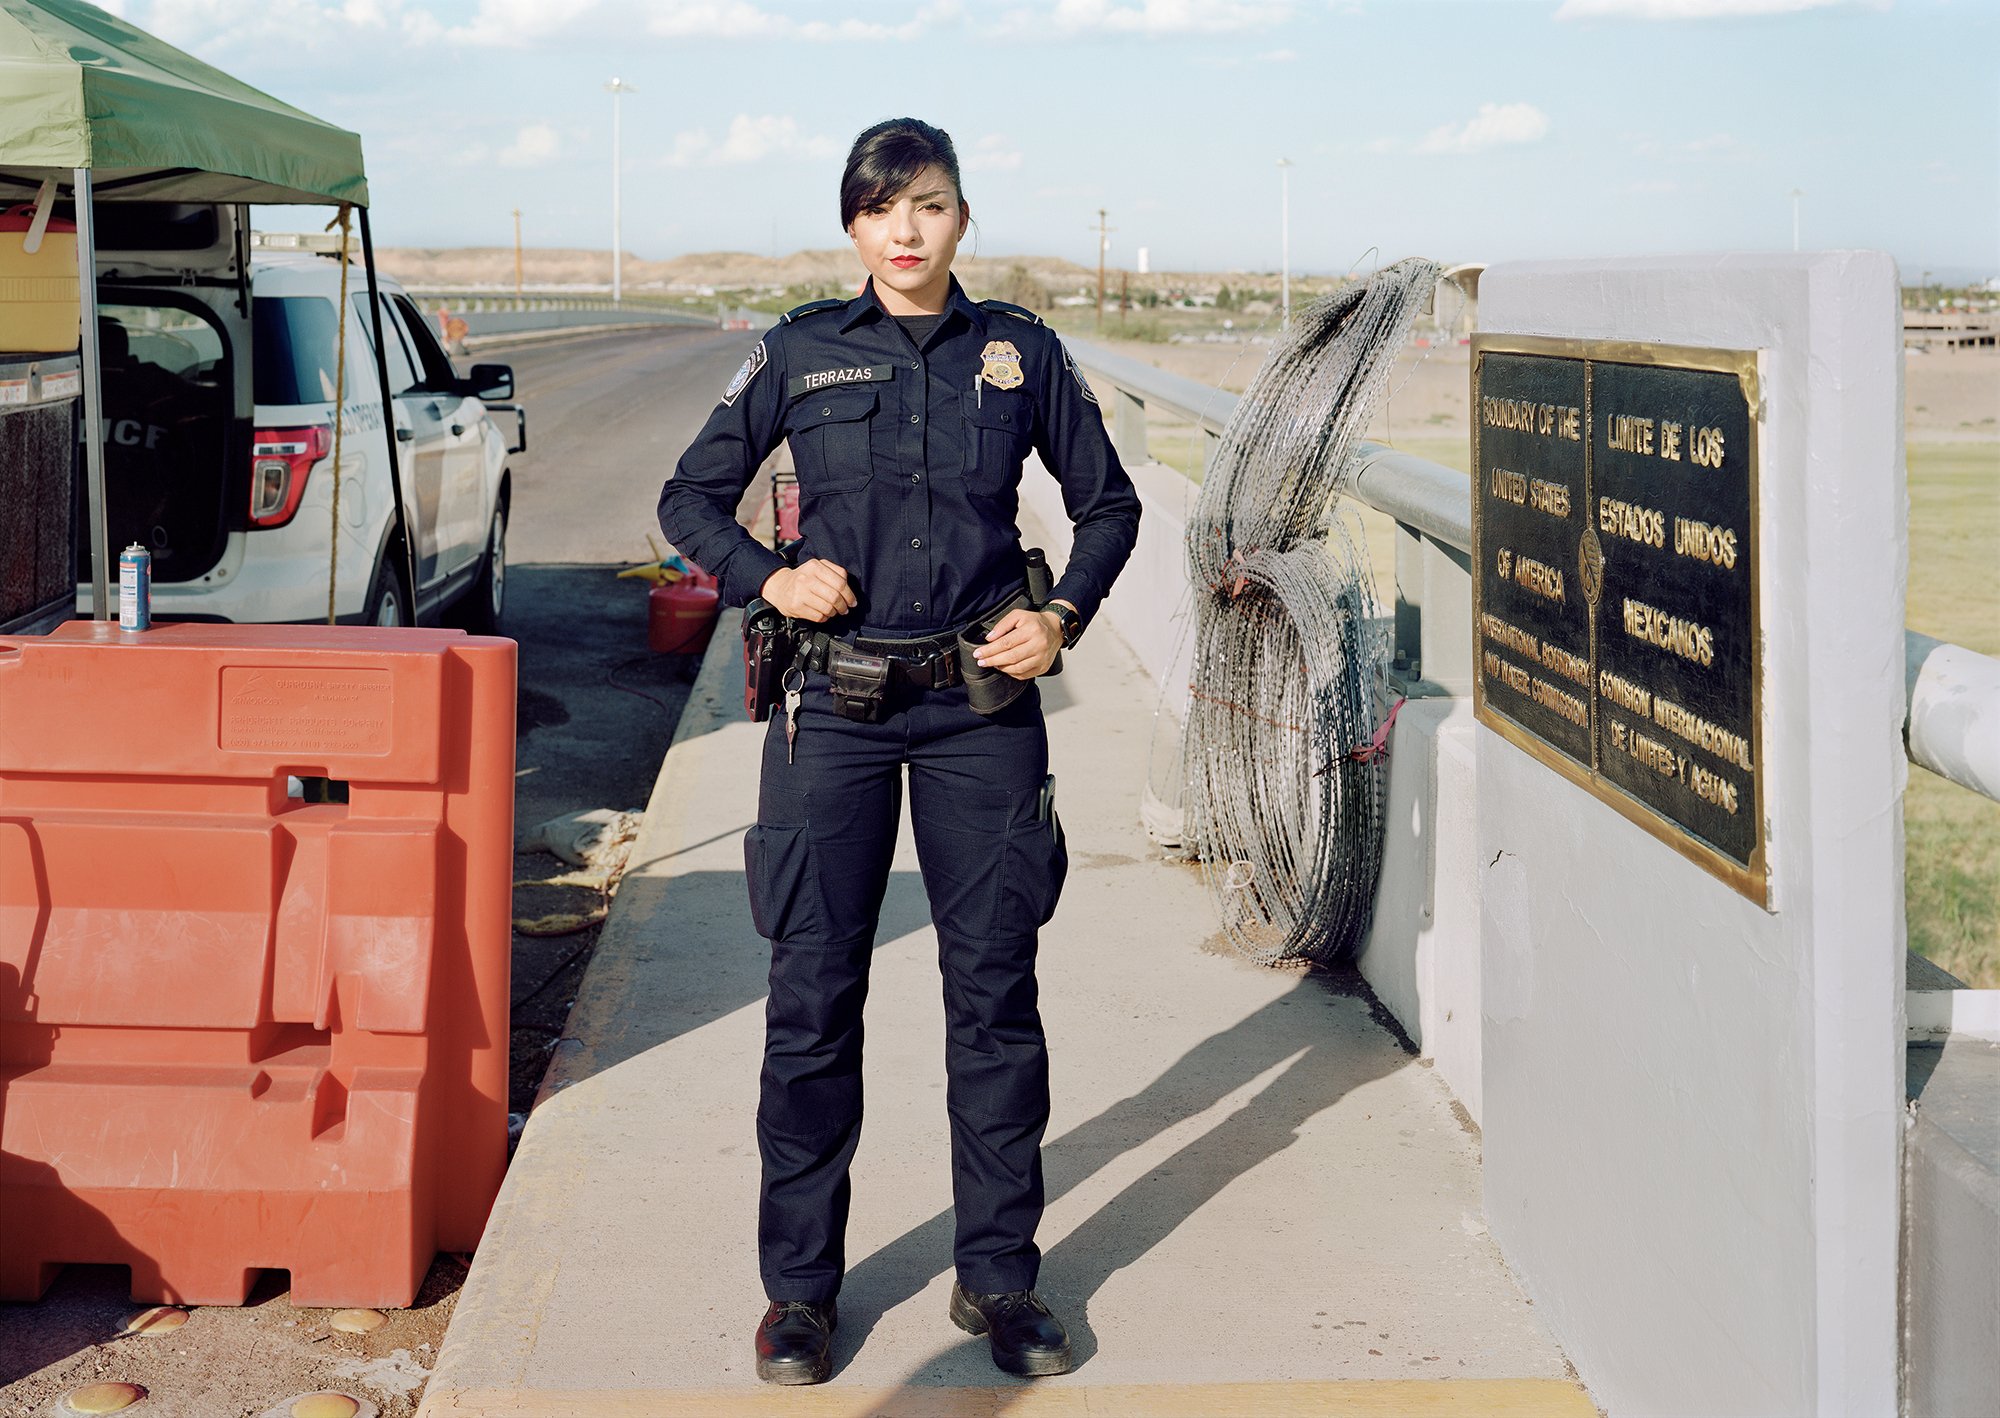 US Customs and Border Protection Officer, Presidio-Ojinaga International Bridge, Presidio, Texas, 2019